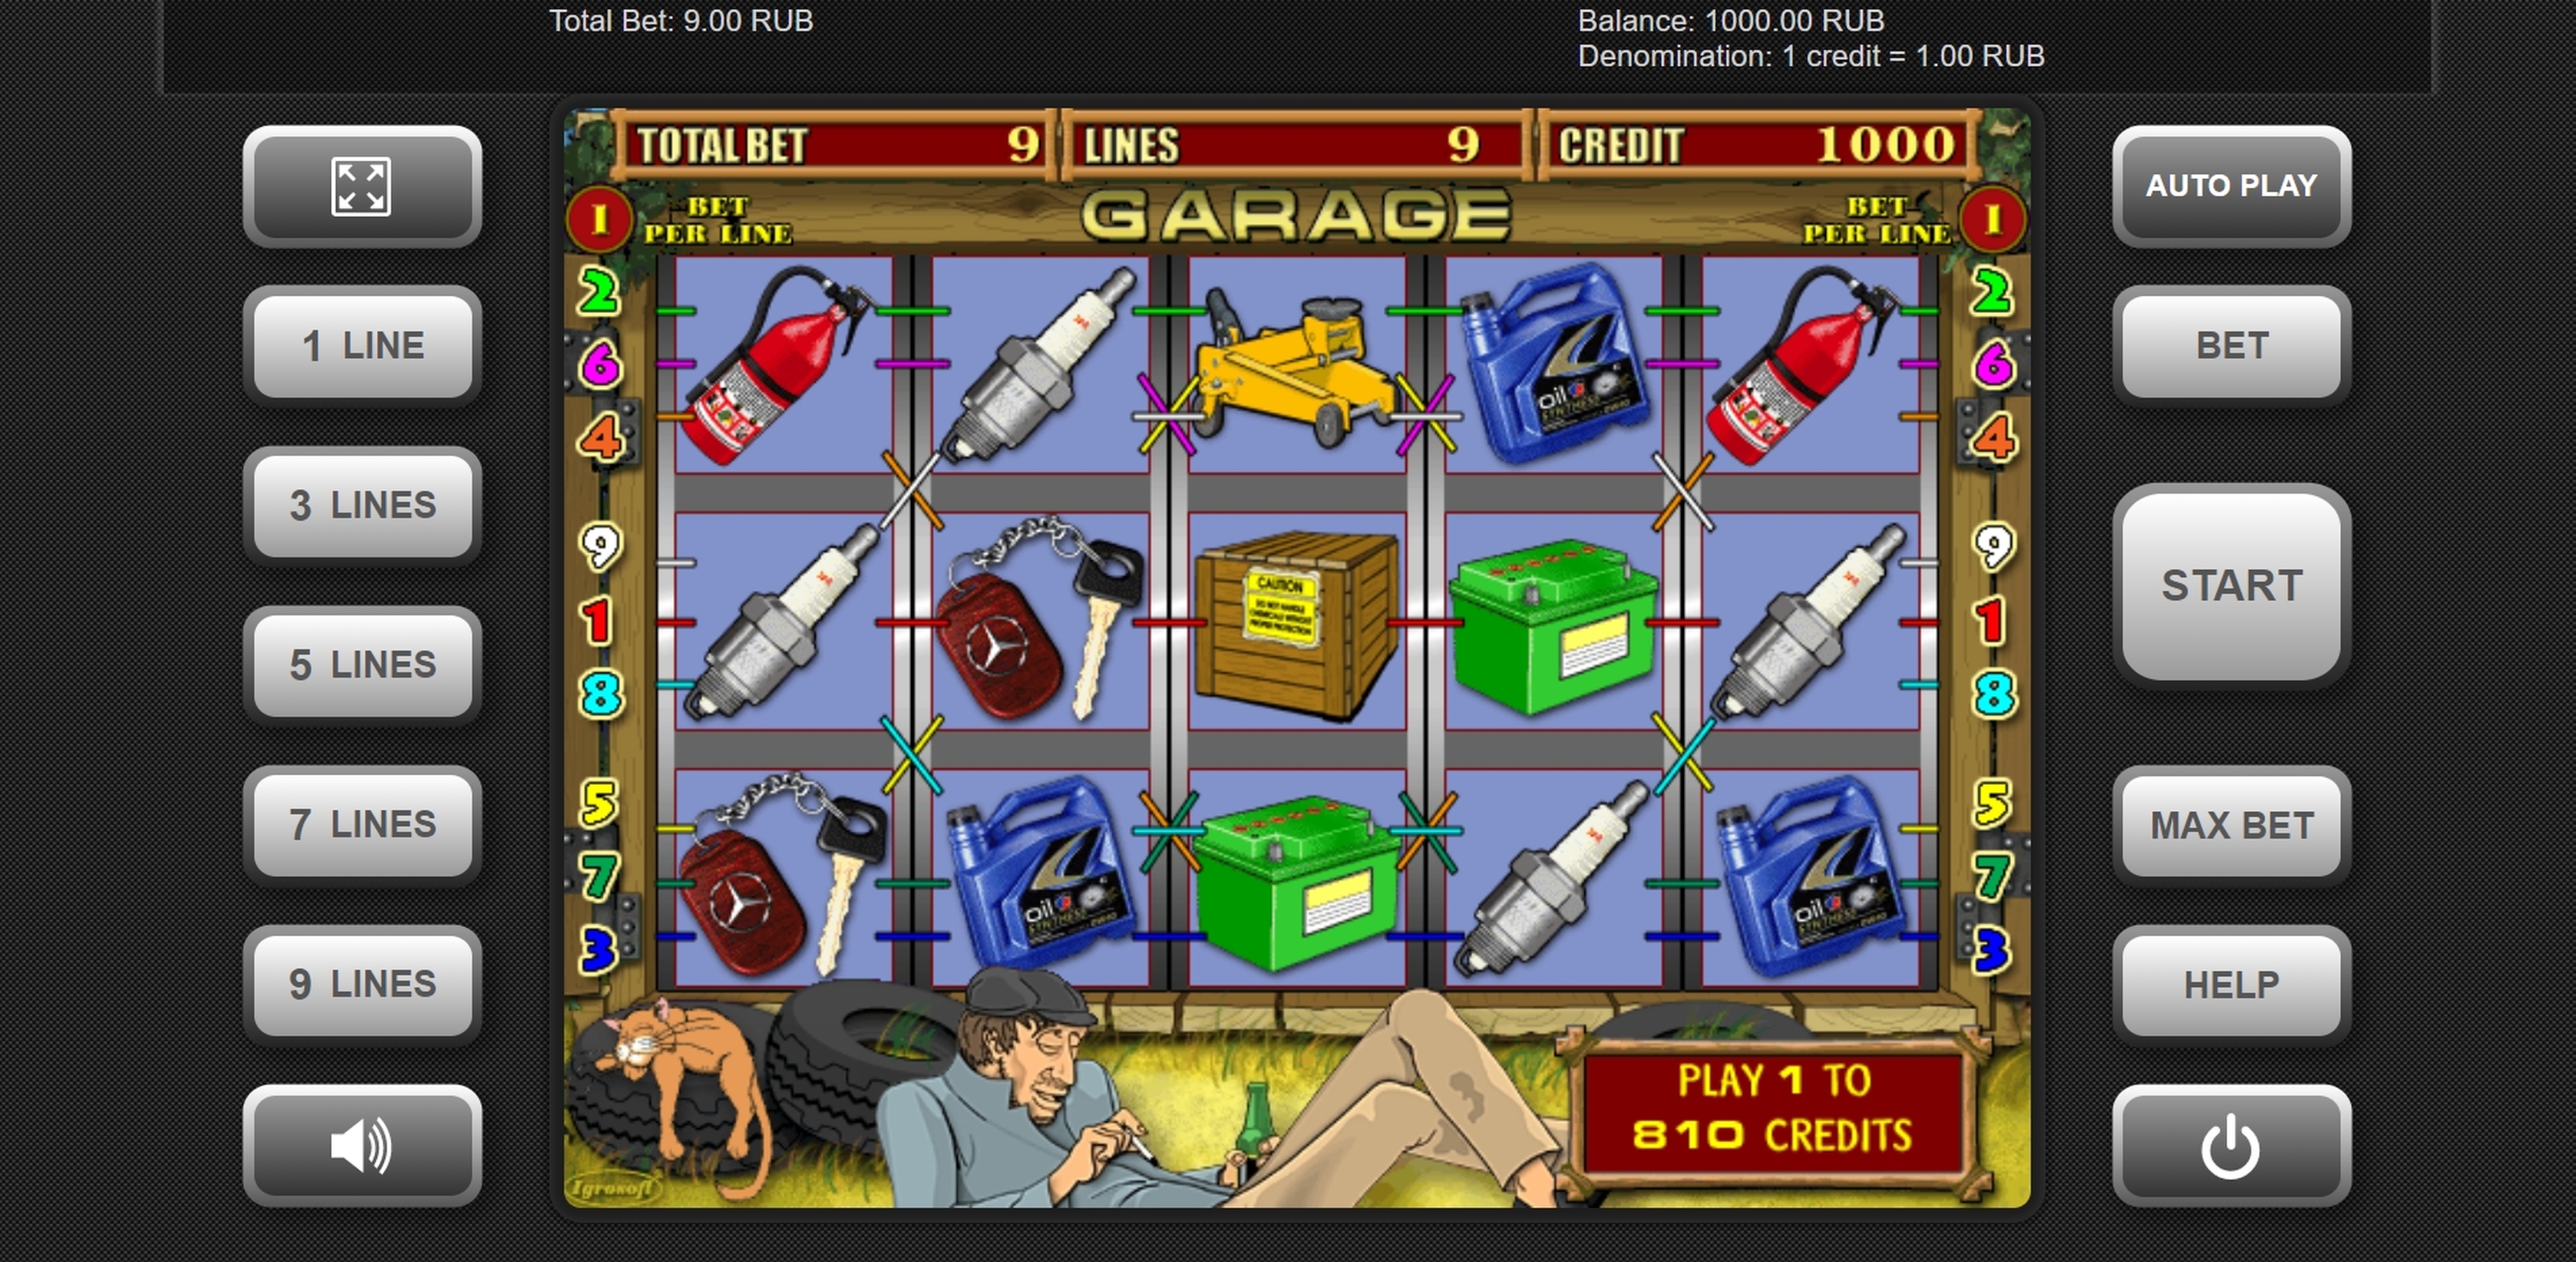 Reels in Garage Slot Game by Igrosoft